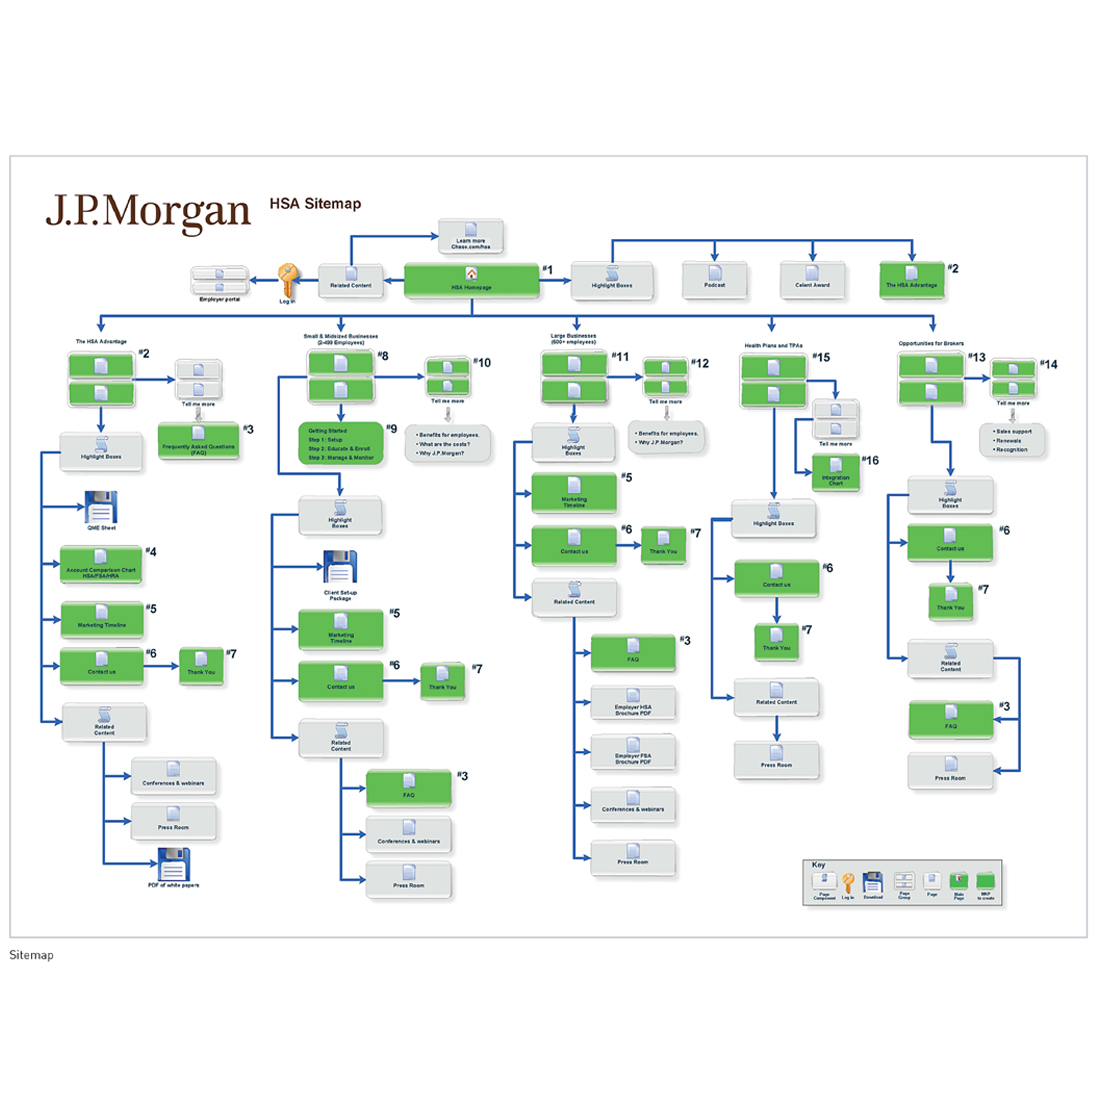 JPMorgan sitemap of HSA microsite